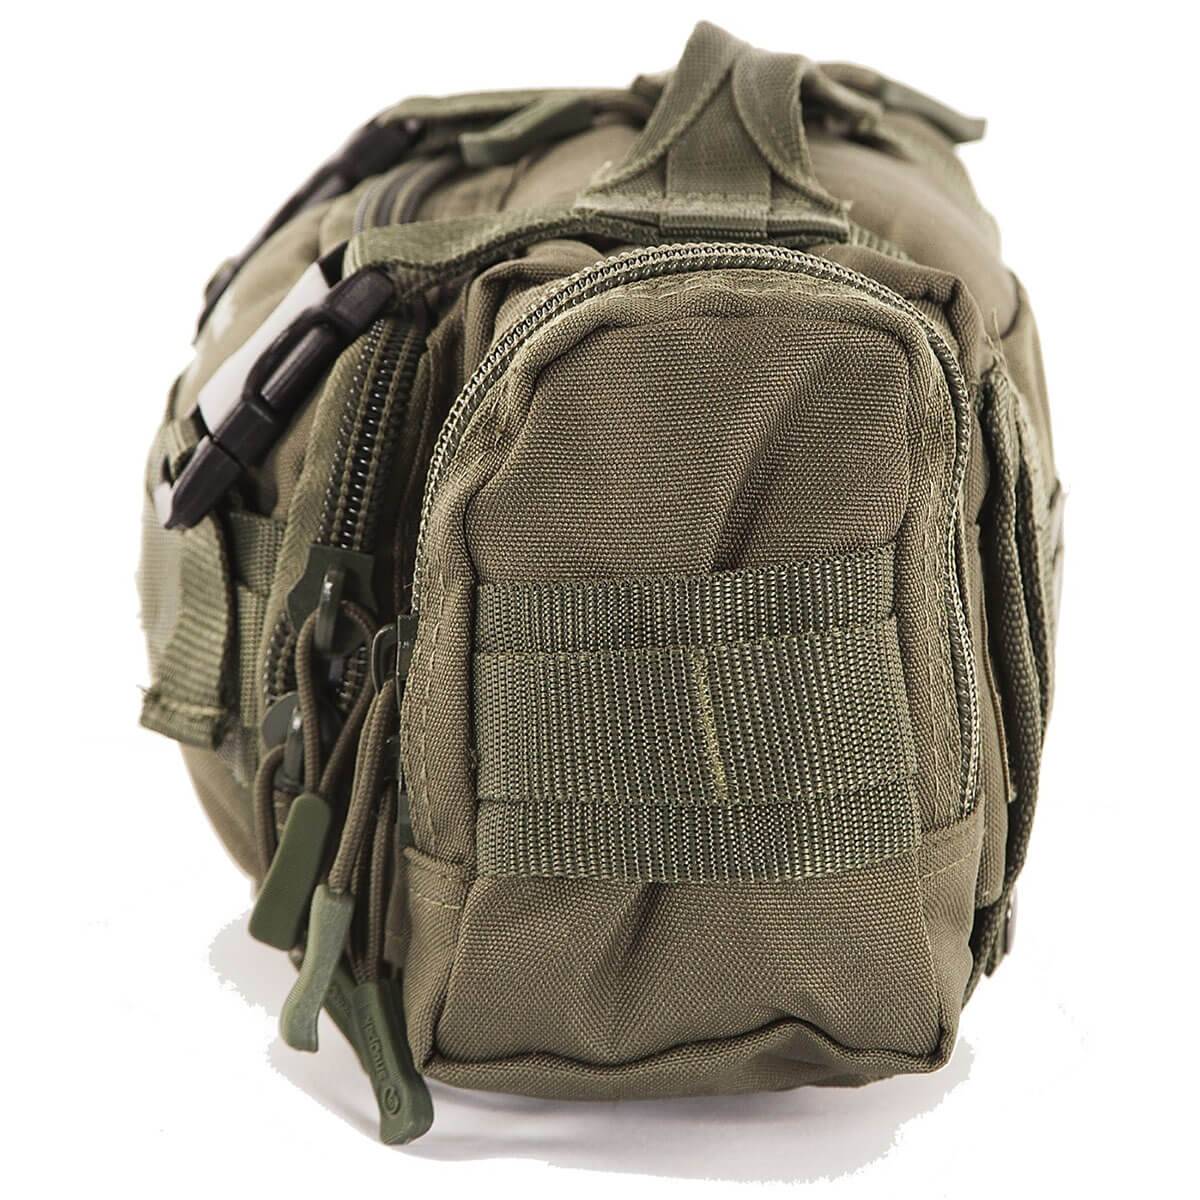 Snugpak ResponsePak Tactical Deployment Bag - John Bull Clothing